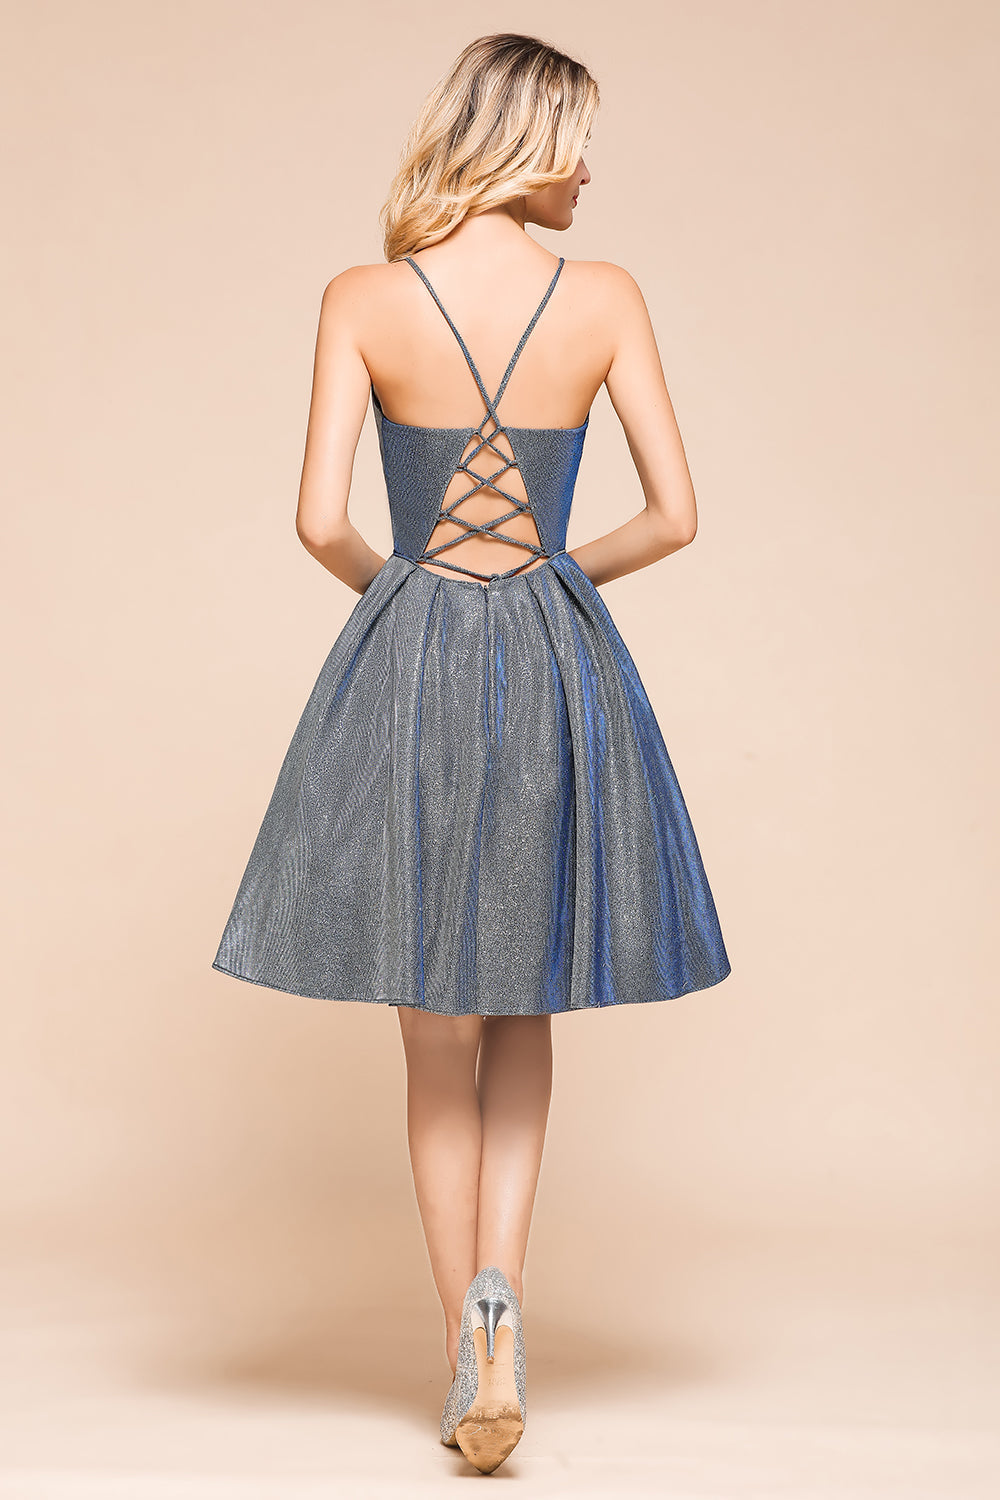 Shinning Halter V-Neck Prom Dress | Short Homecoming Dress